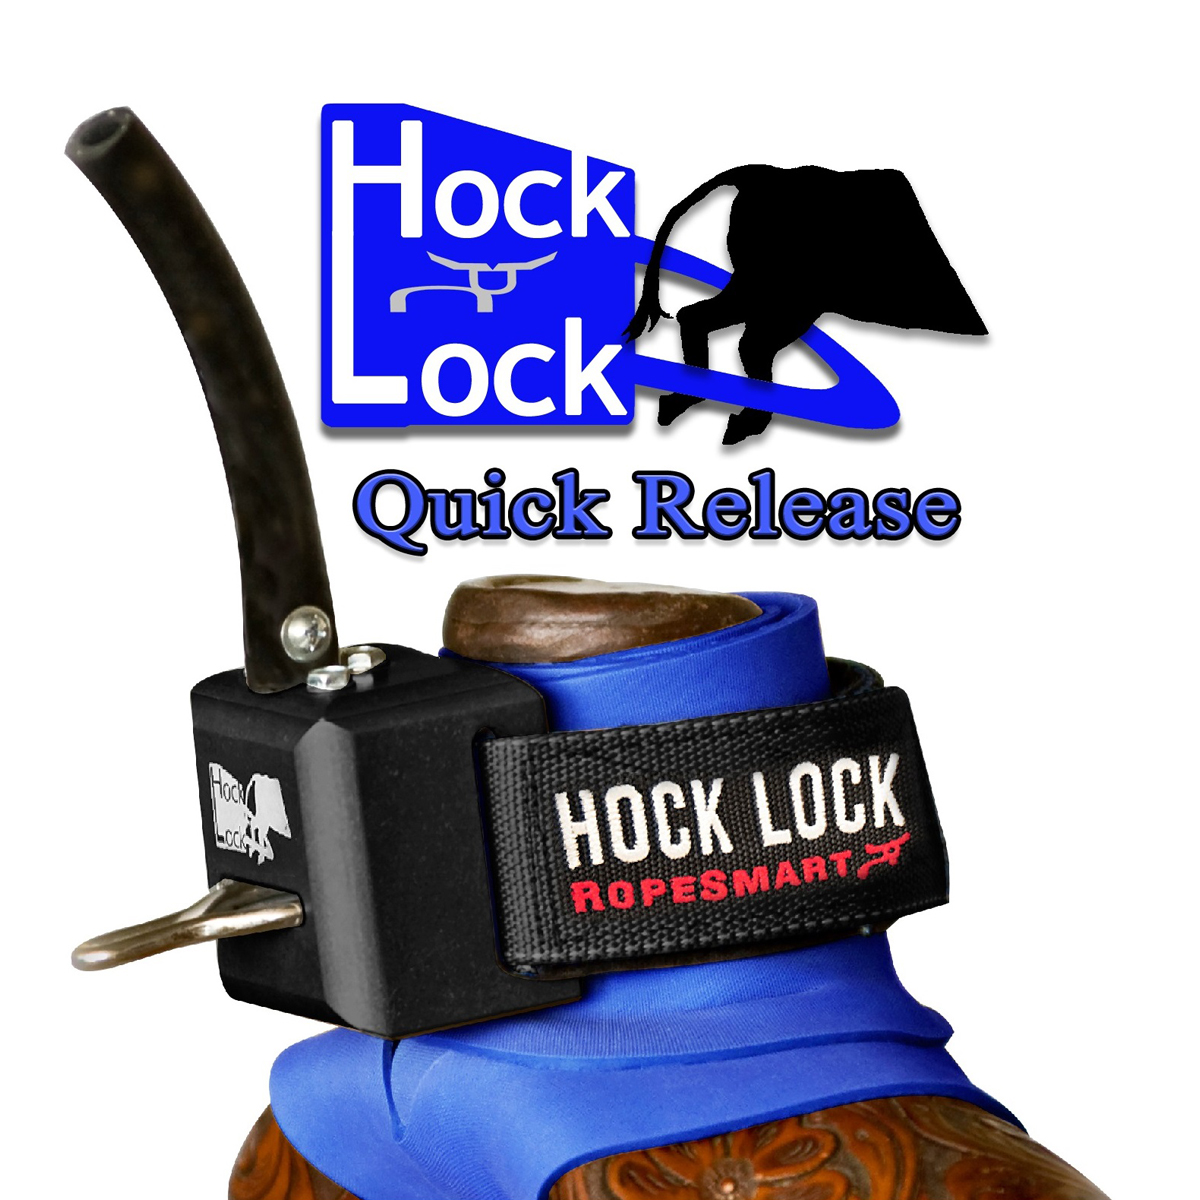 RopeSmart Hock Lock